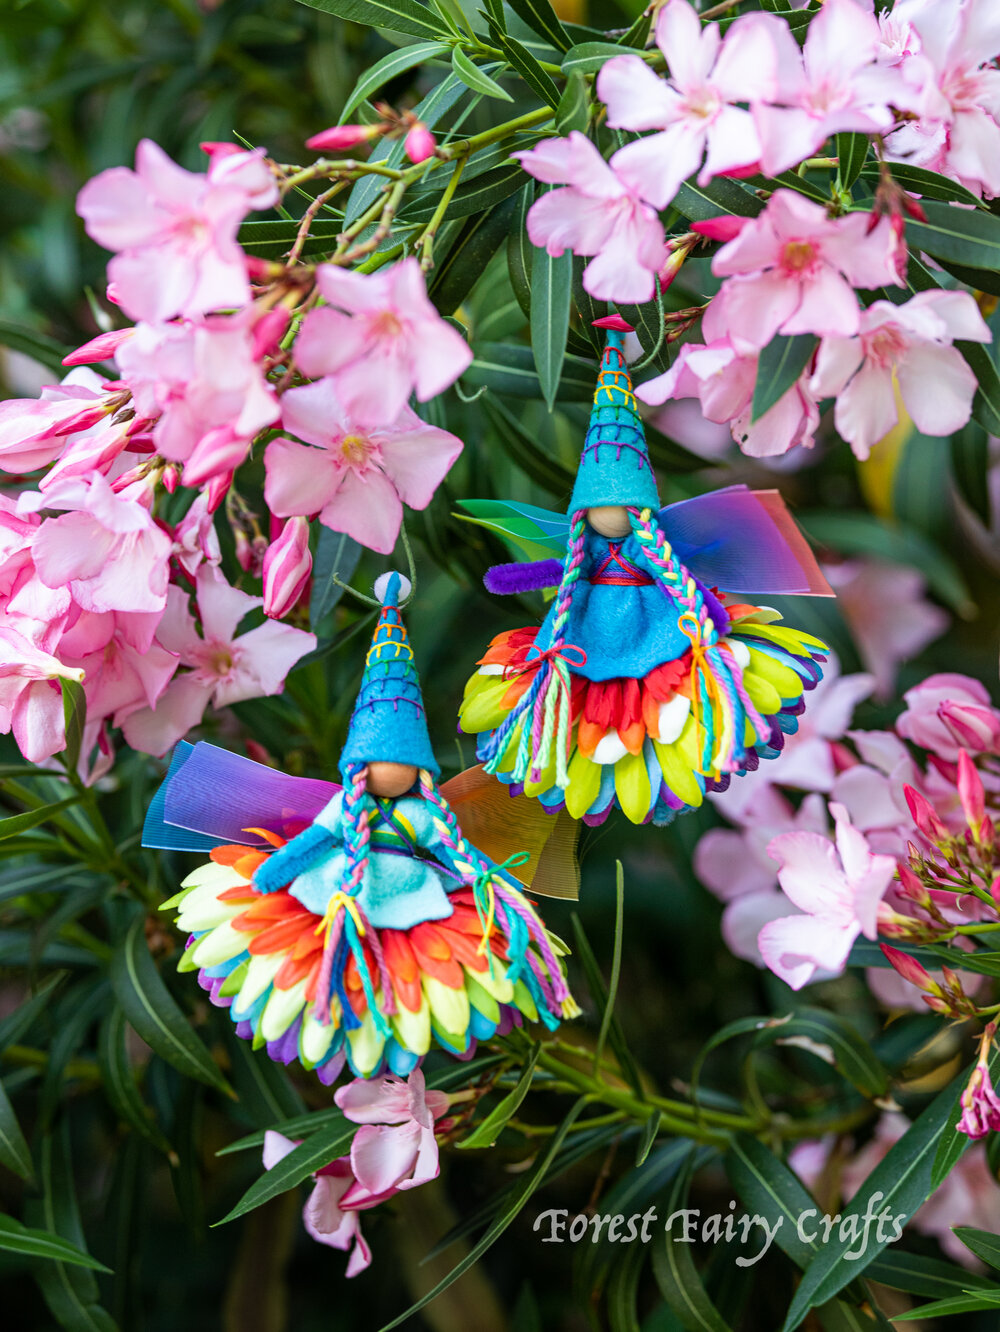 Rainbow Fairies by Forest Fairy Crafts made by Lenka Vodicka